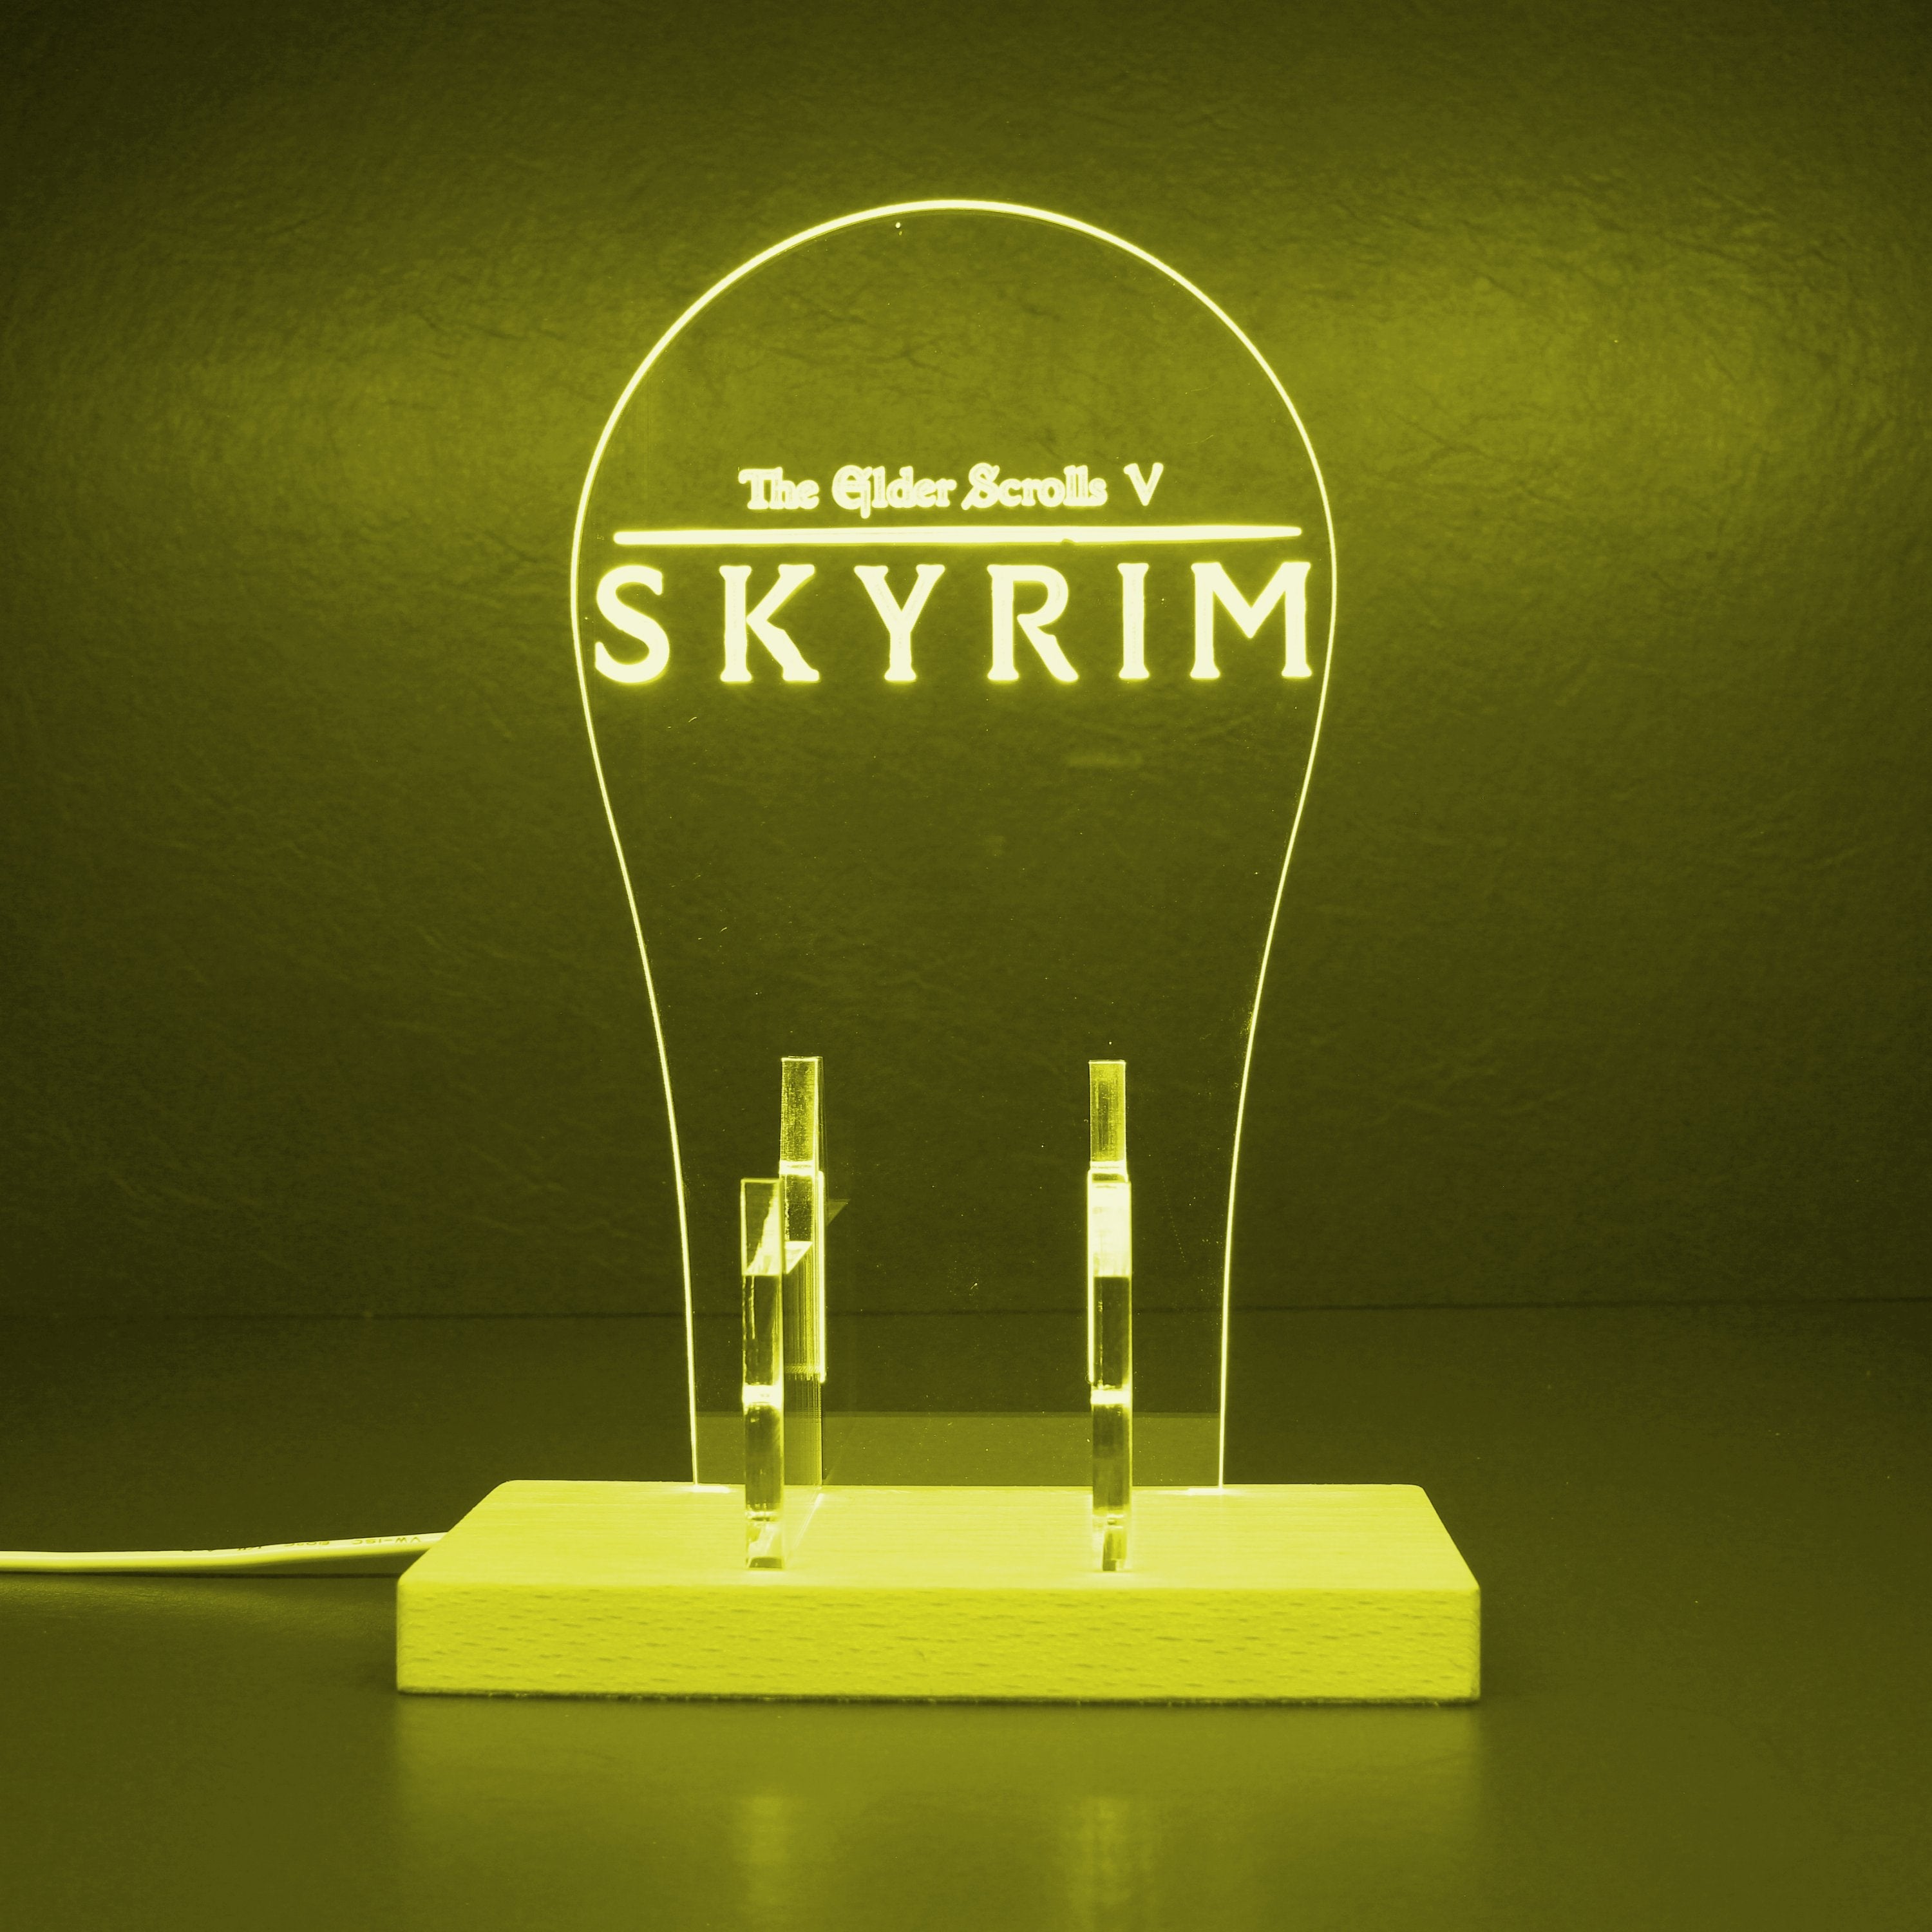 Elder Scrolls Skyrim LED Gaming Headset Controller Stand